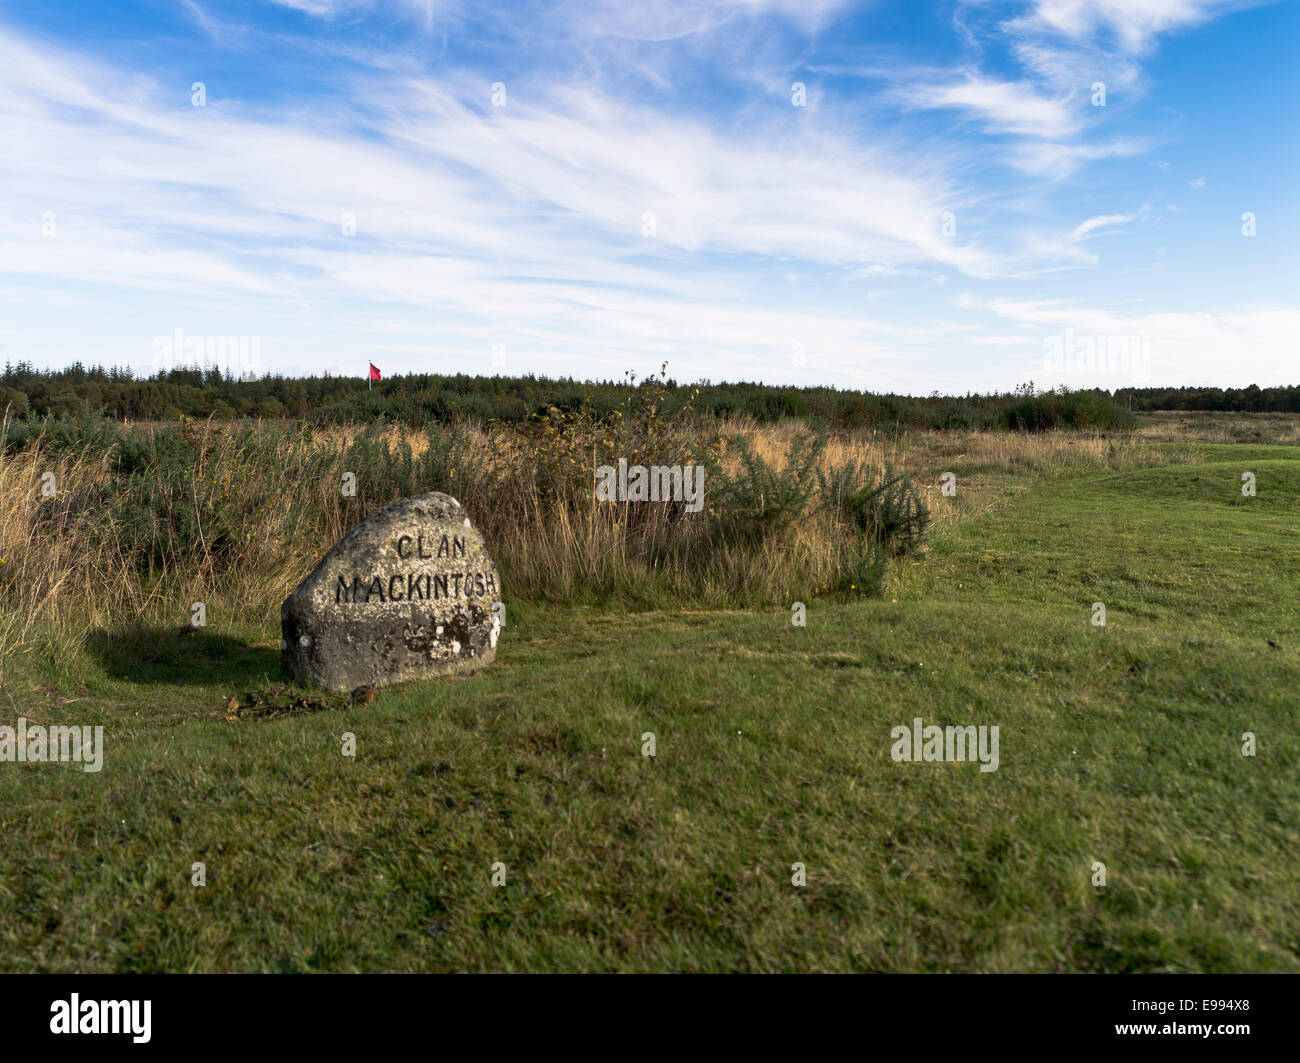 dh Mackintosh clan graves stone CULLODEN MOOR SCOTLAND Grave Highland Jacobite jacobites rebellion 1745 battlefield 1746 battle scottish battles Stock Photo